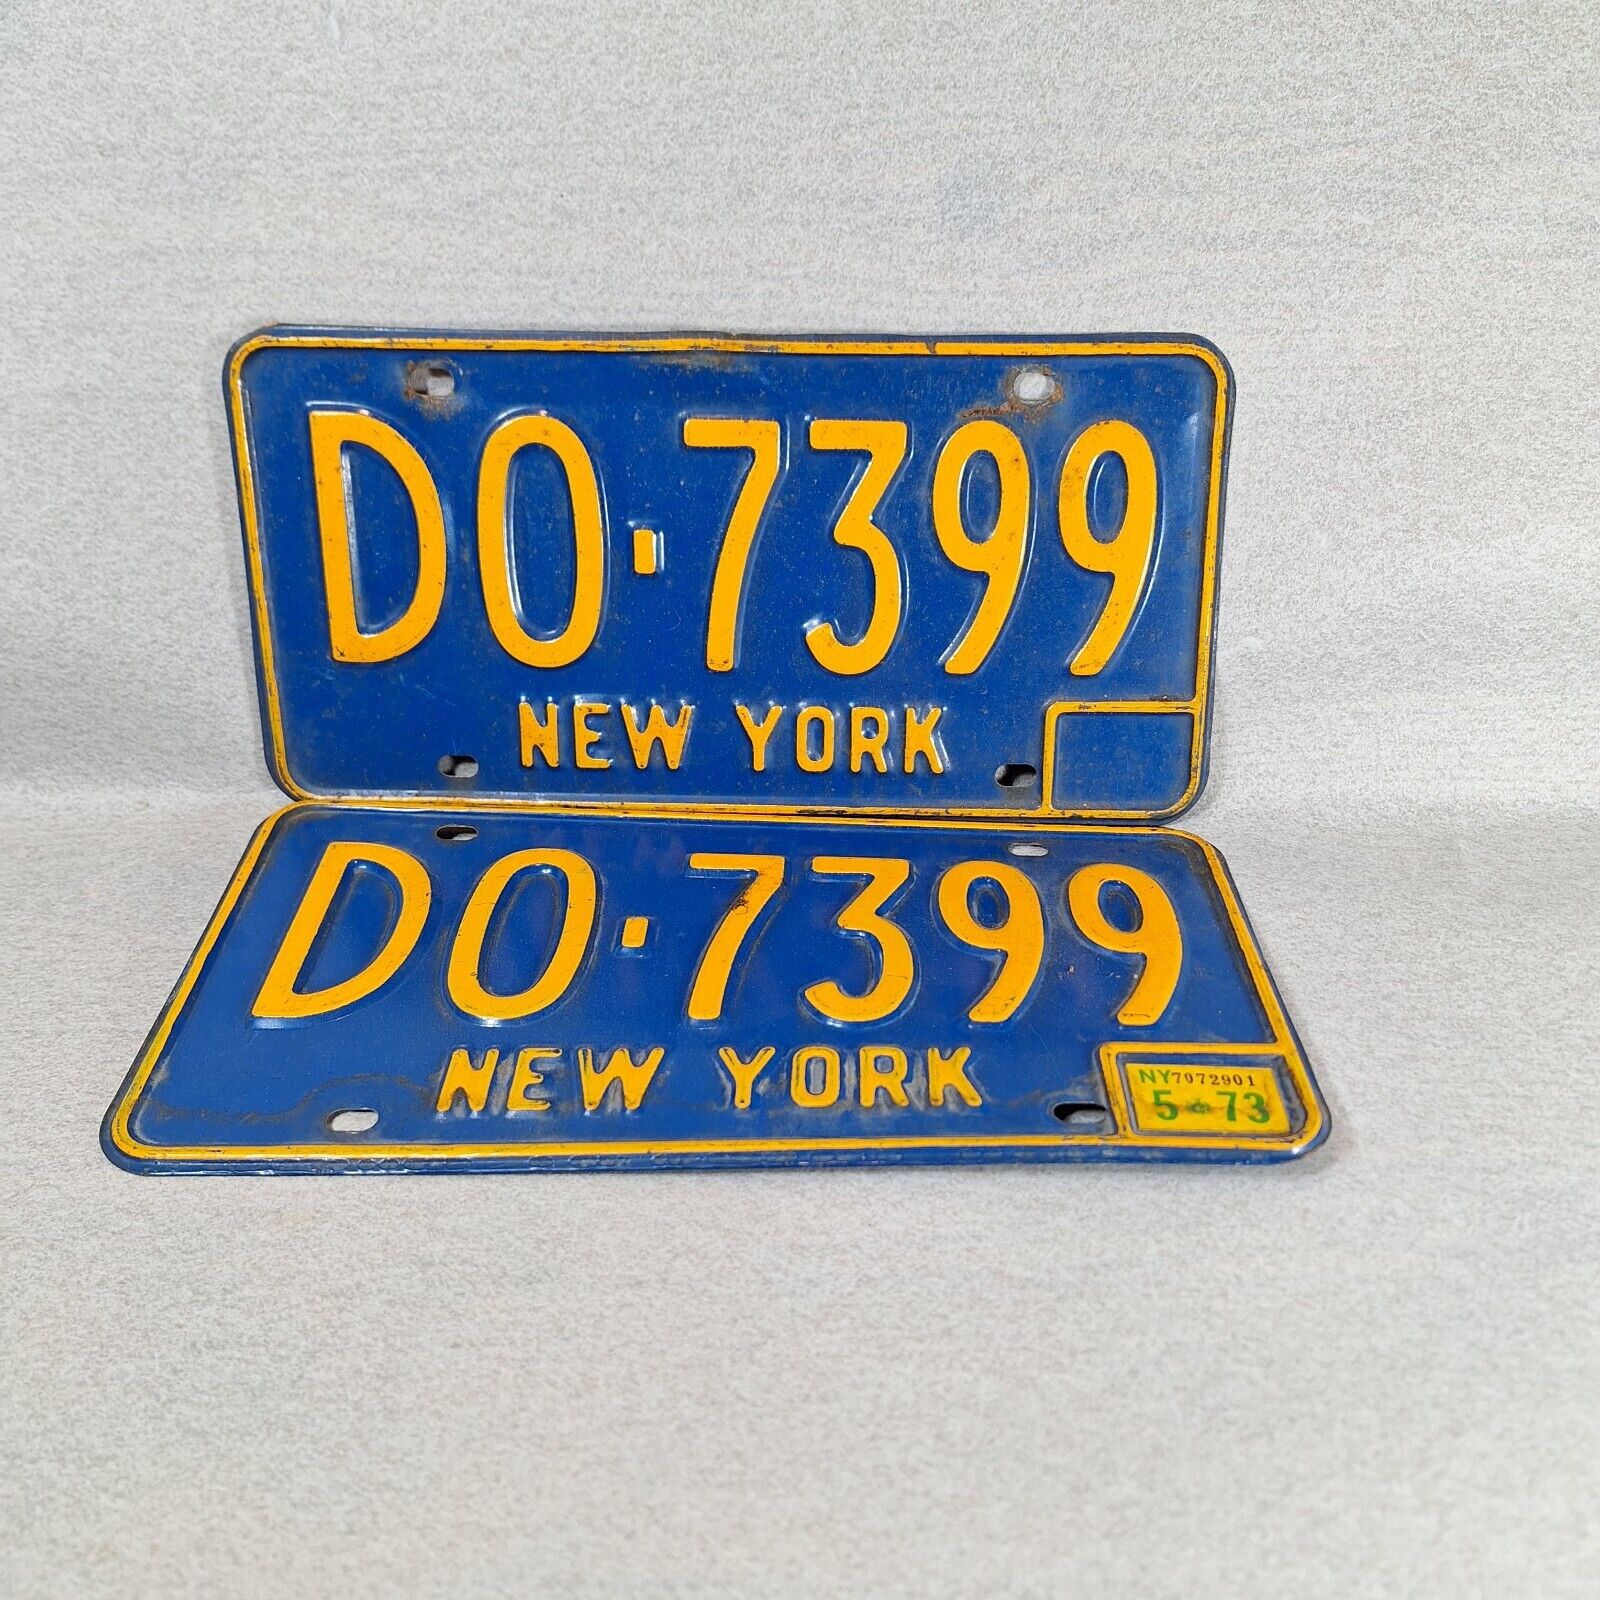 1973 New York License Plate Pair Blue 1966-73 Series  #D0 7399